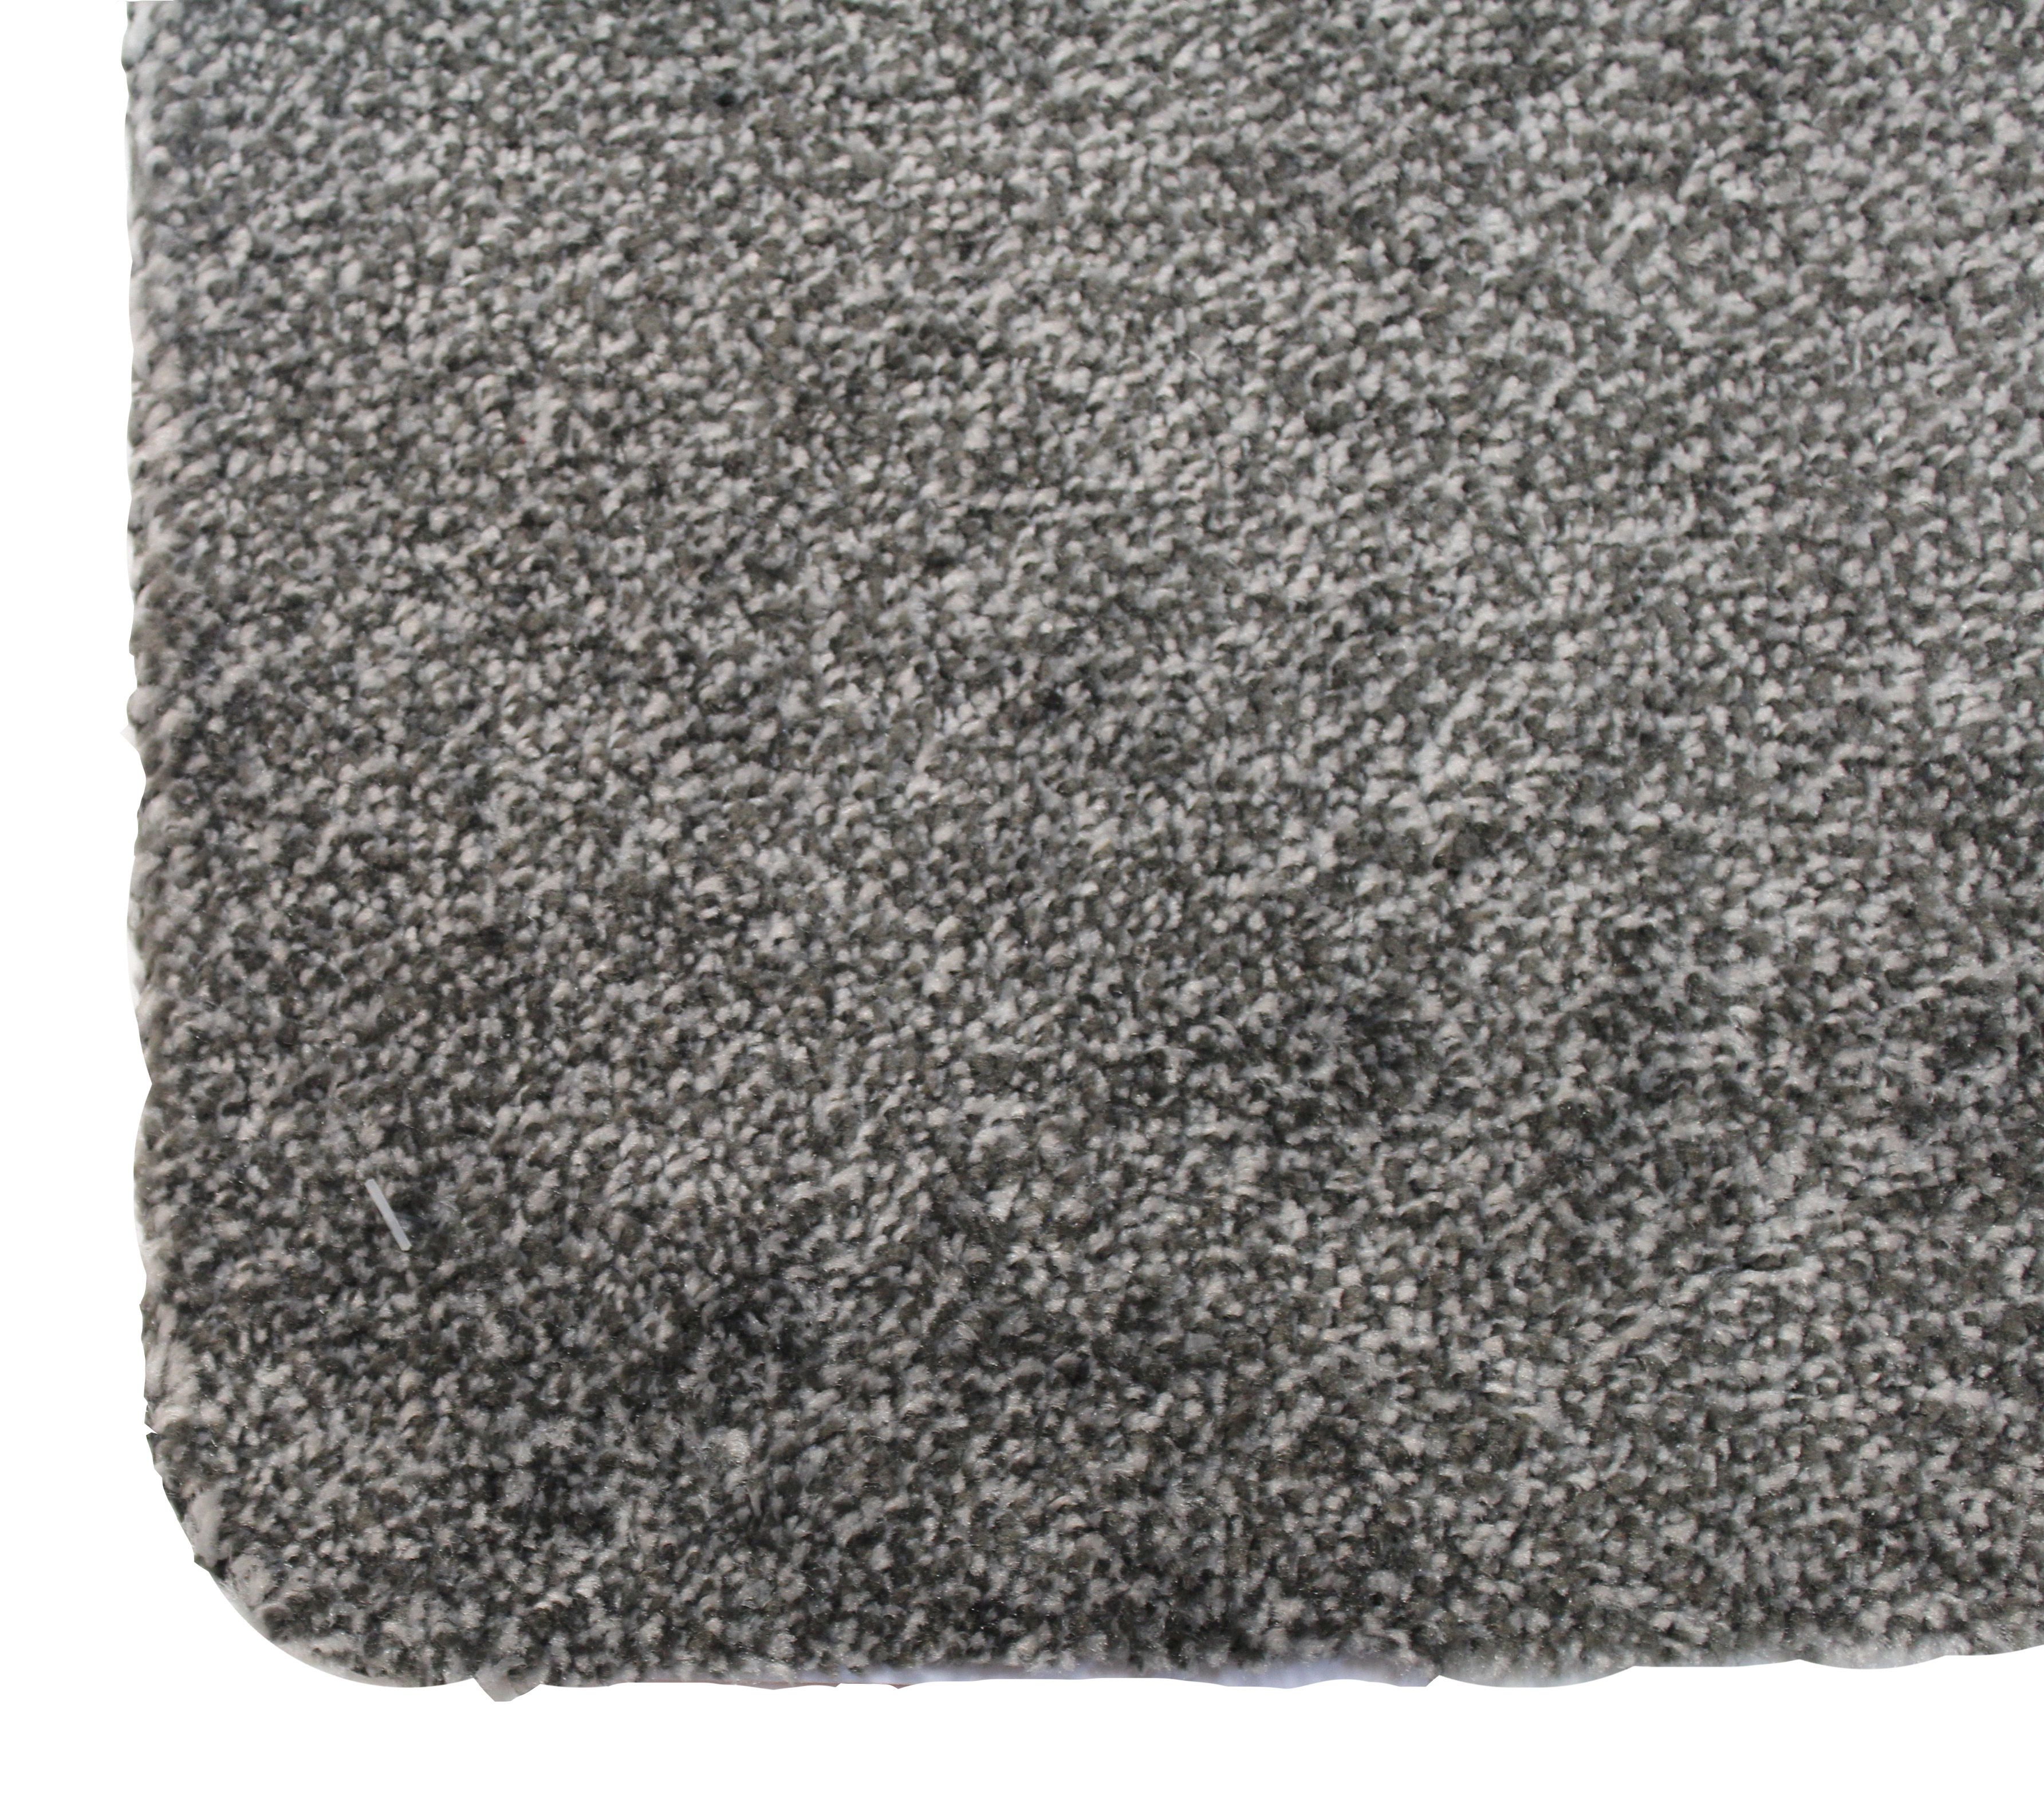 Flooring Grey Plain Door mat, 150cm x 50cm